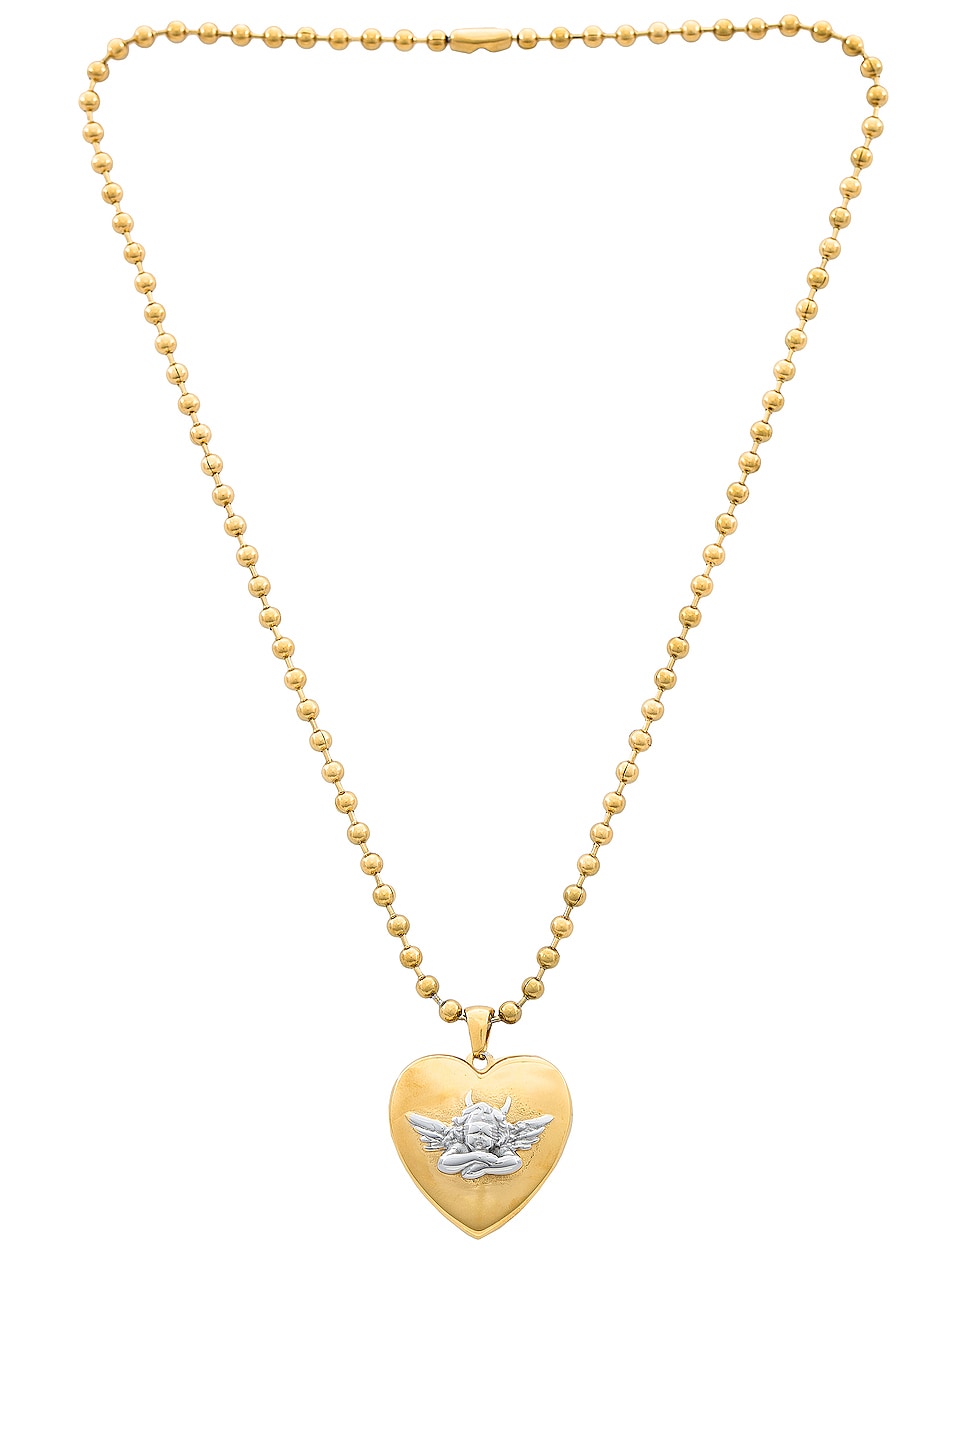 Personalized Angel Wings Heart Photo Locket Necklace - GetNameNecklace